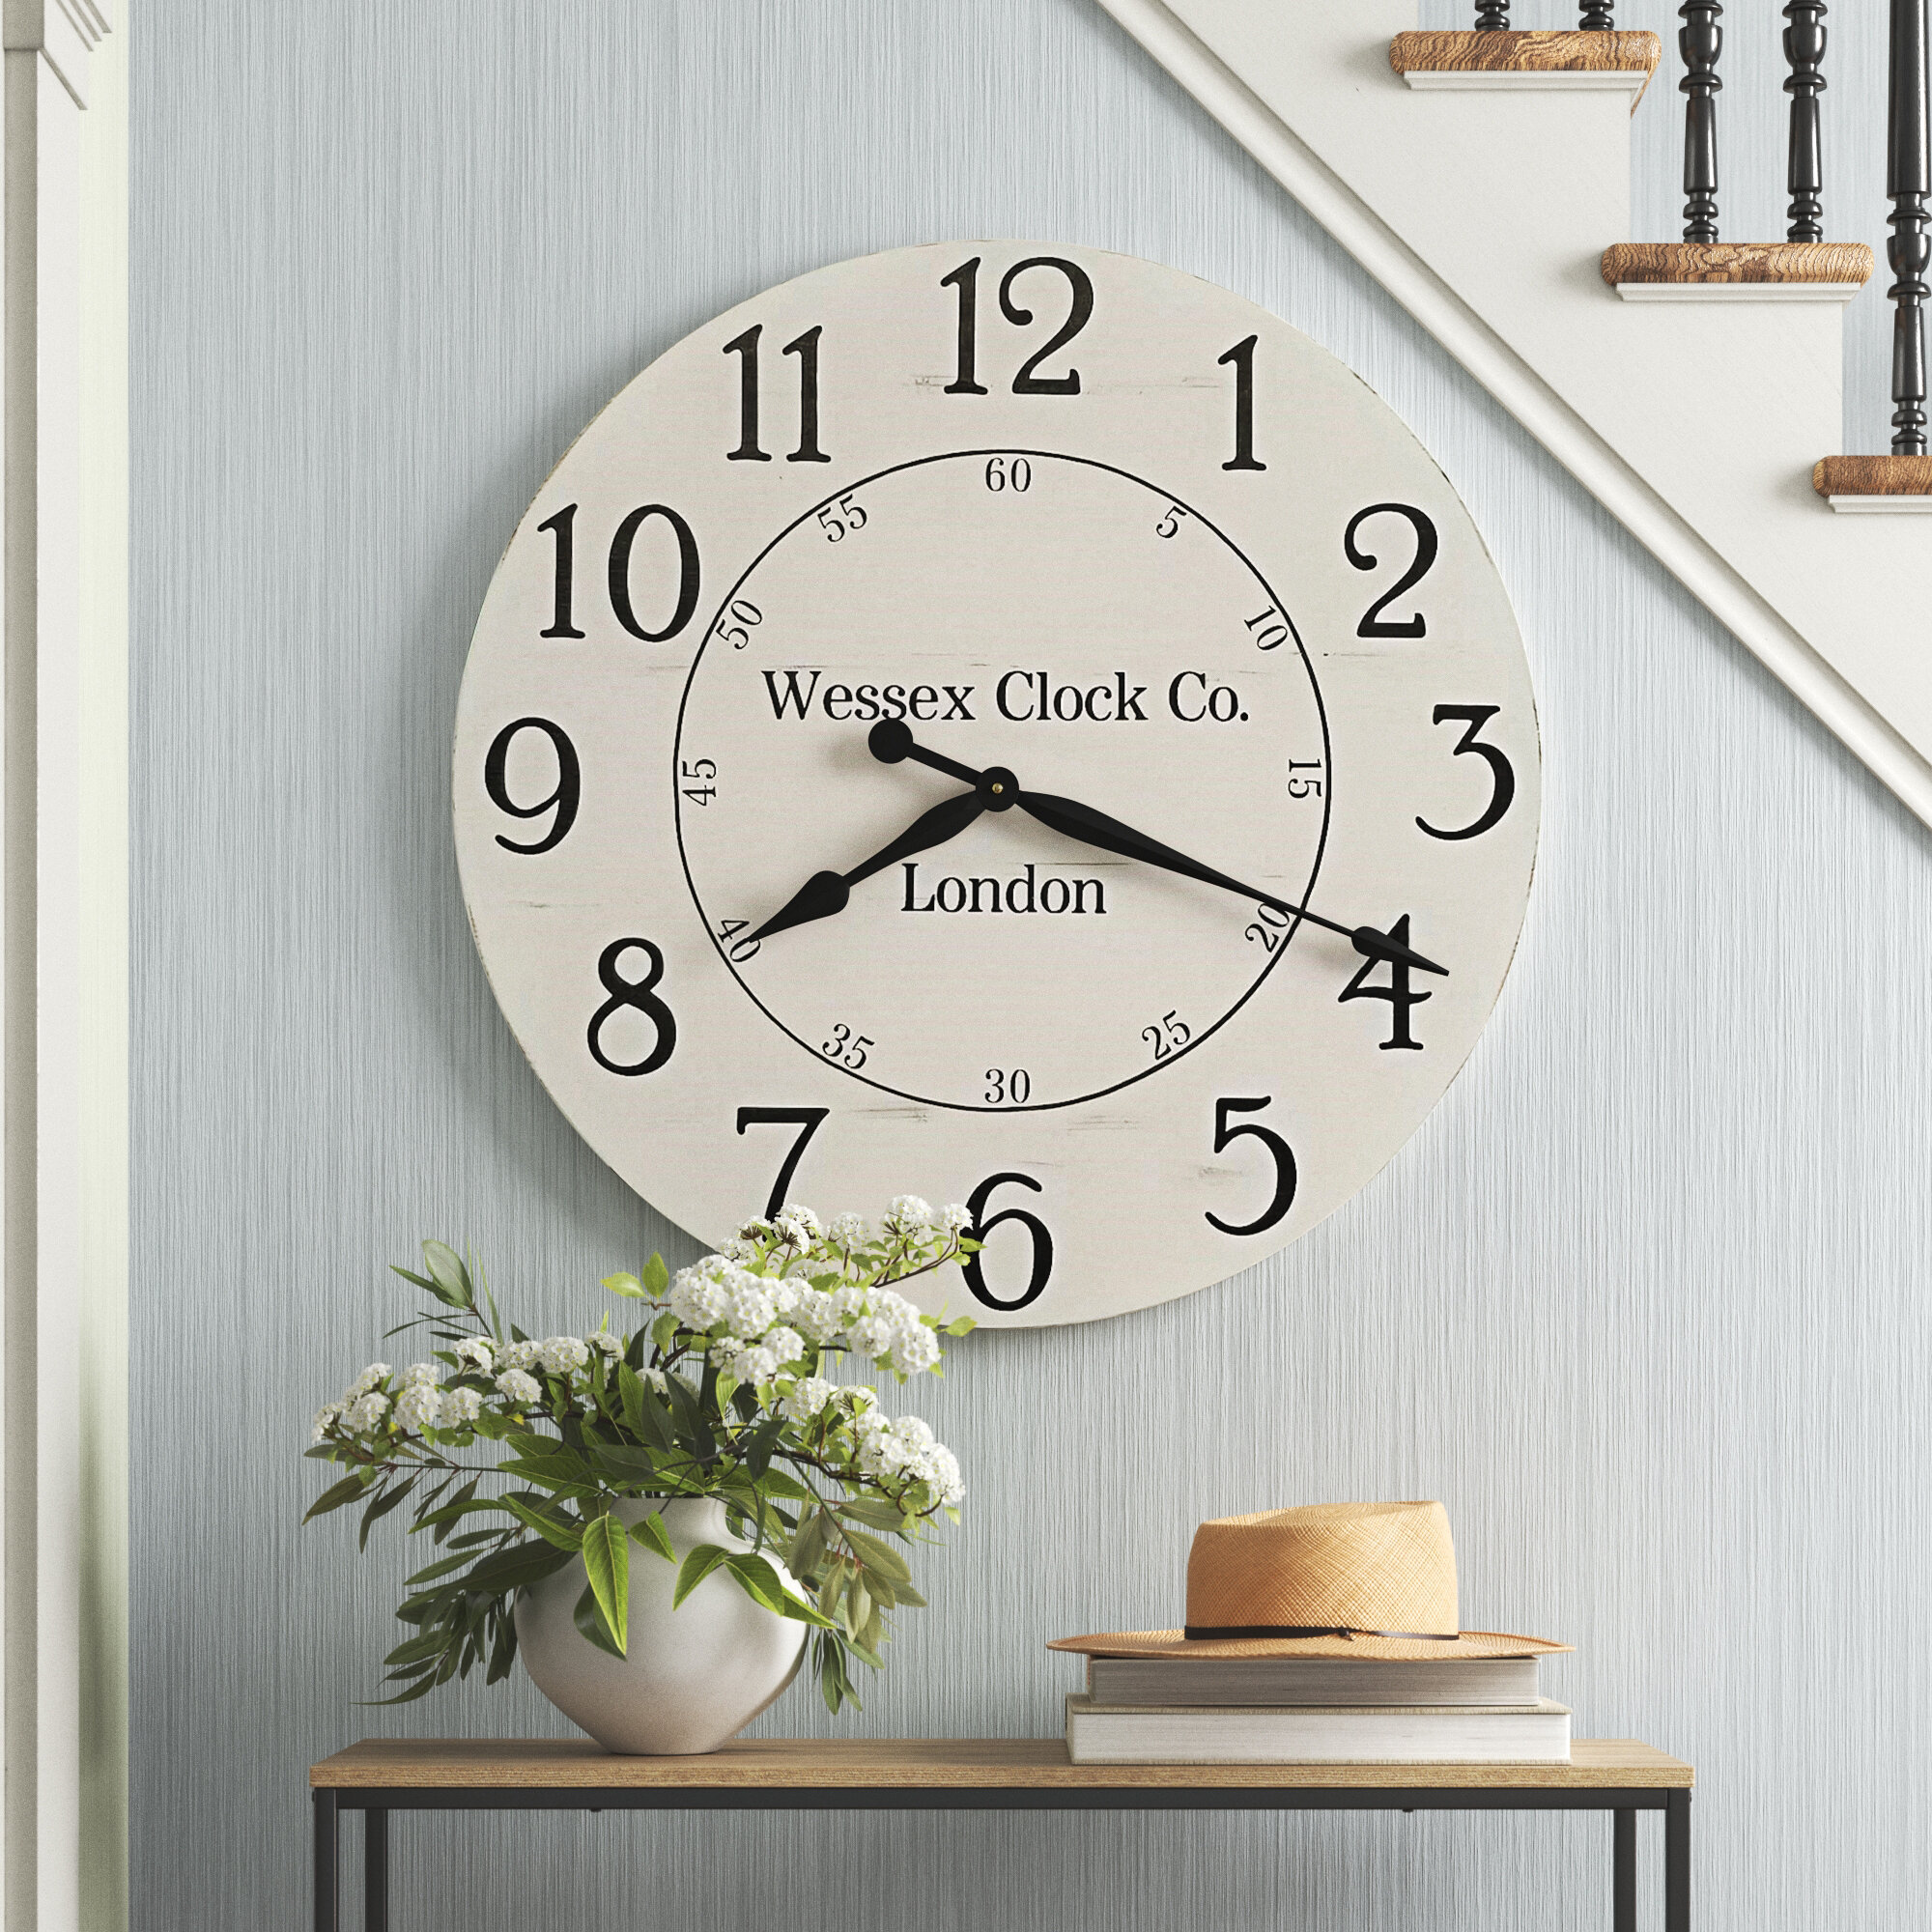 Wall clock - Home decor